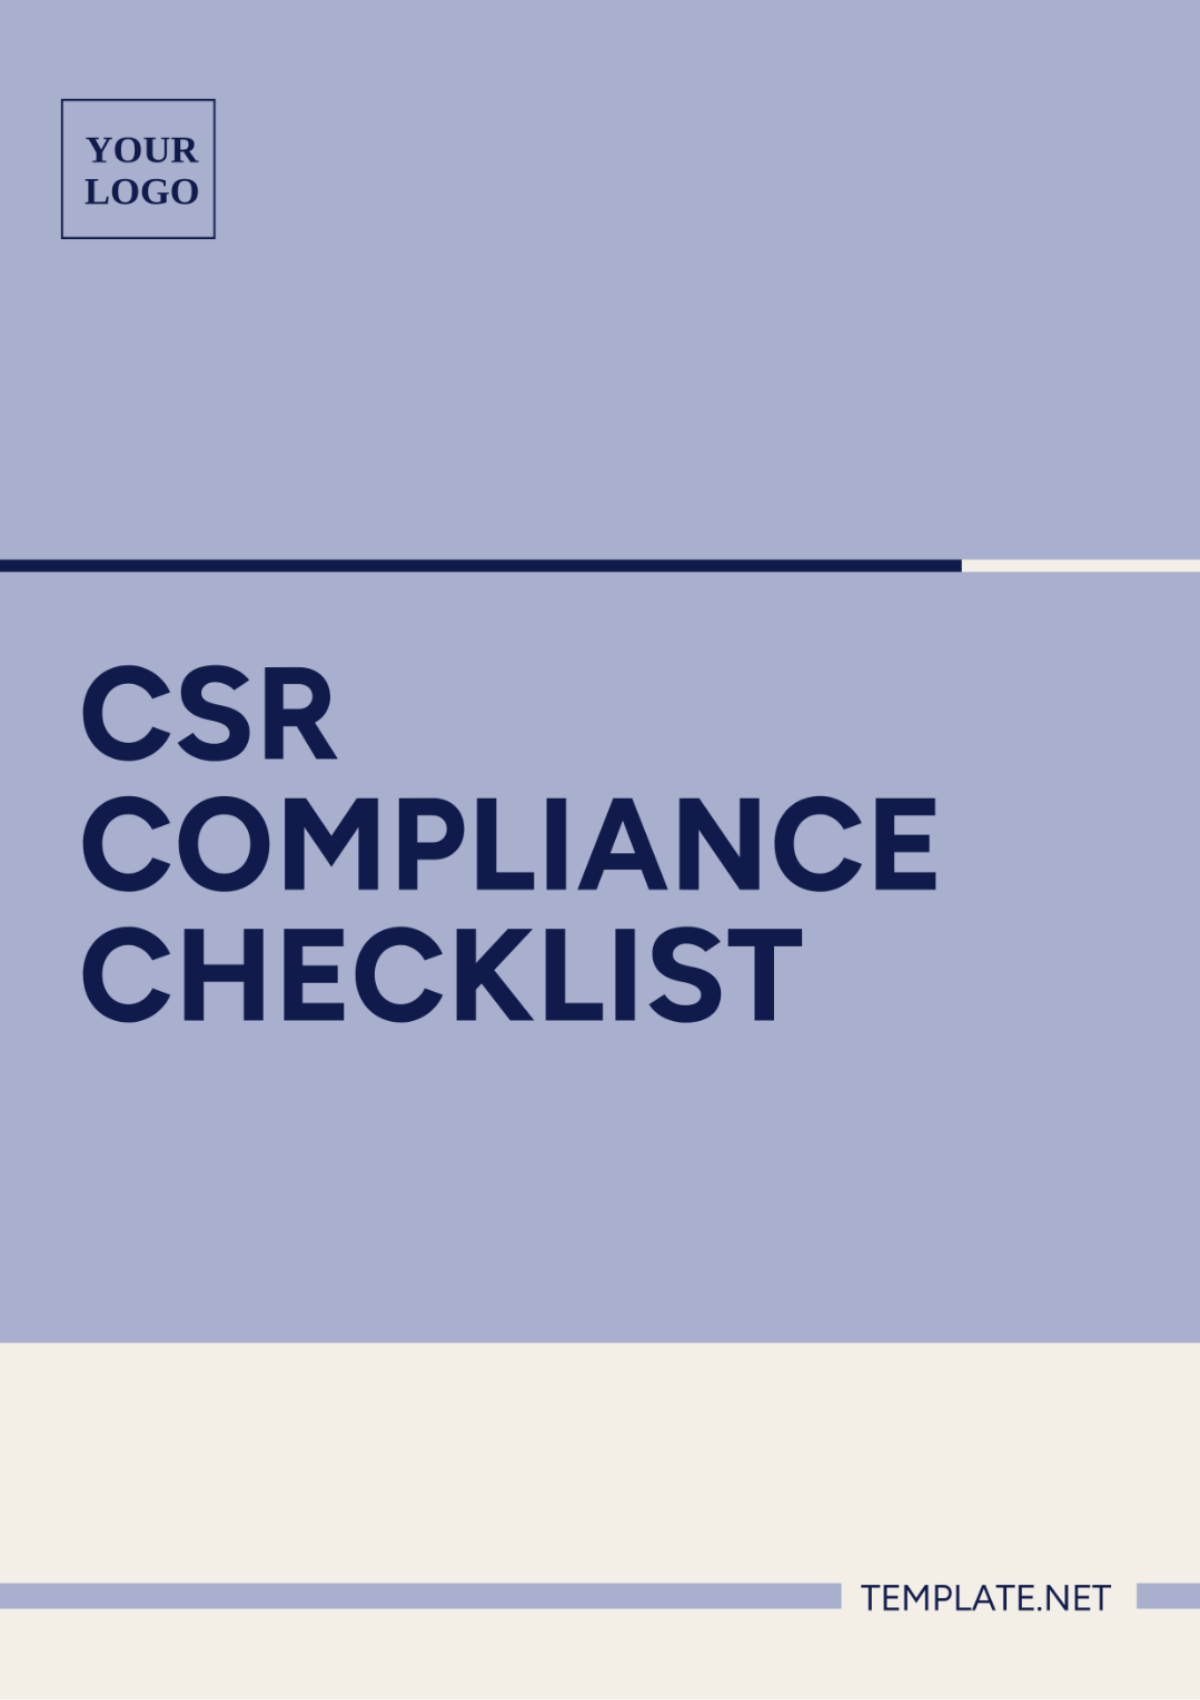 CSR Compliance Checklist Template